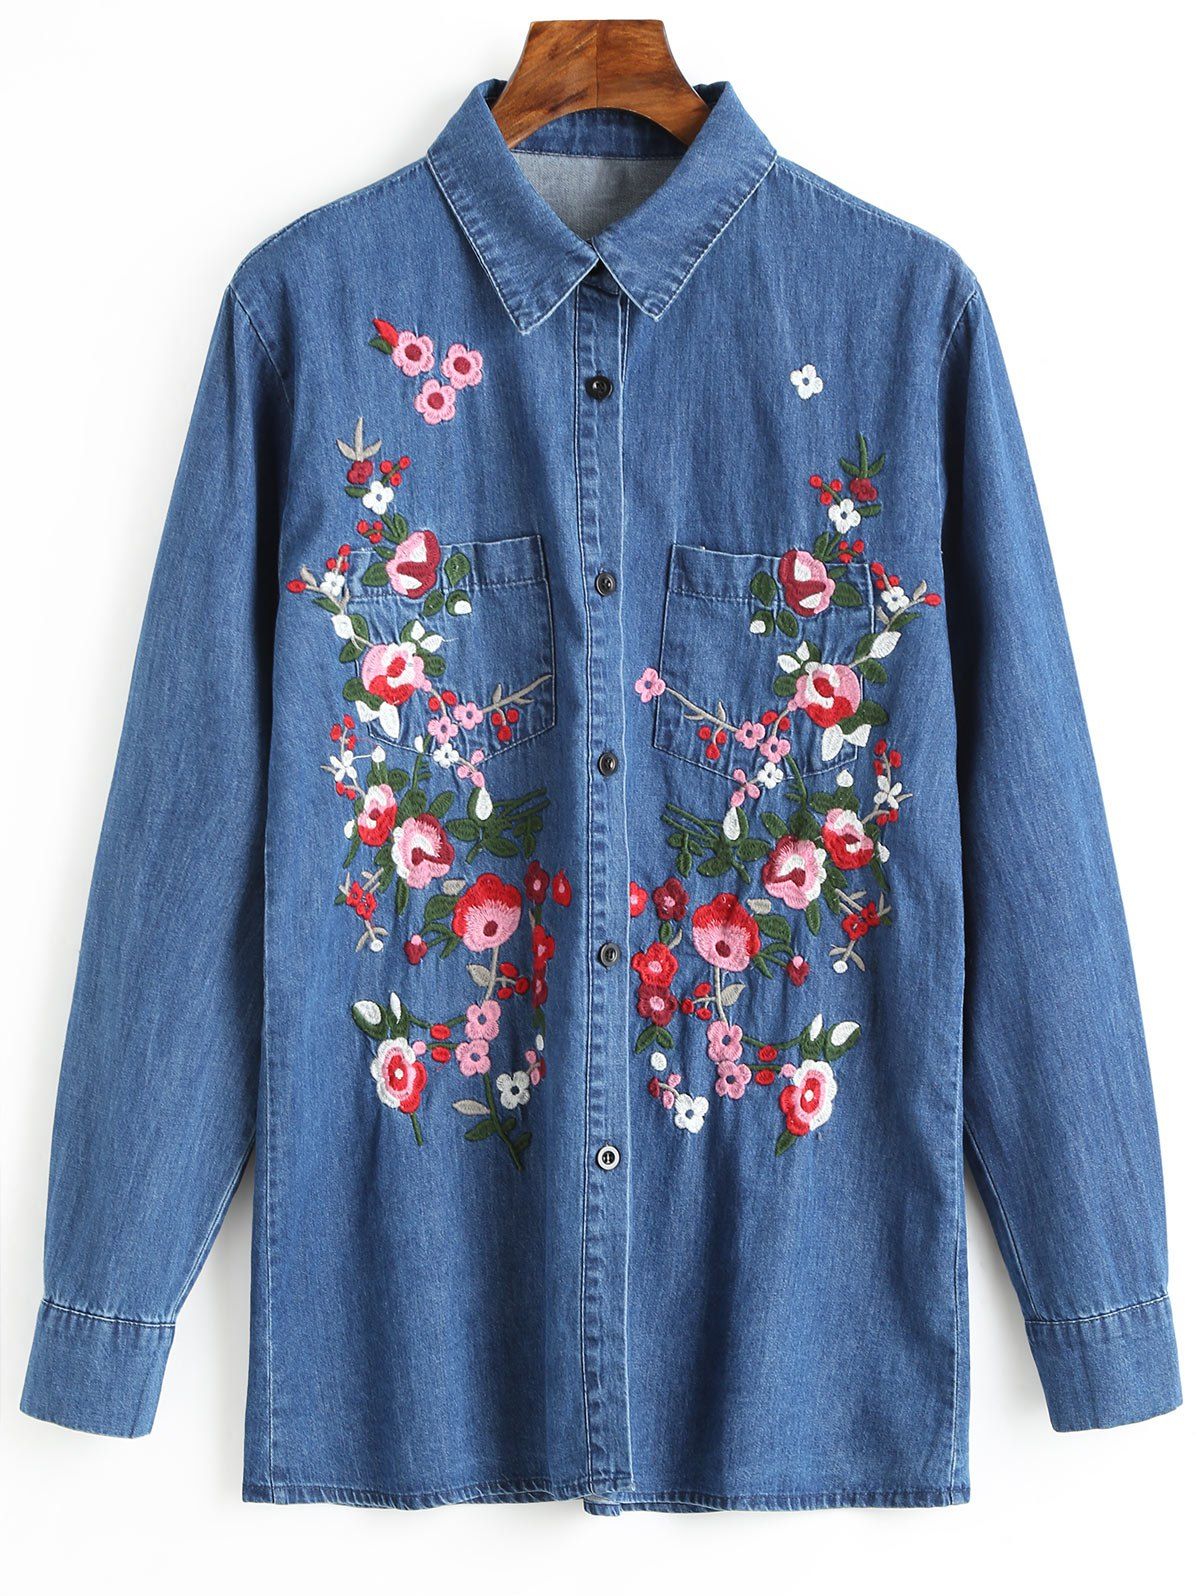 [42% OFF] Button Up Flower Embroidered Denim Shirt | Rosegal